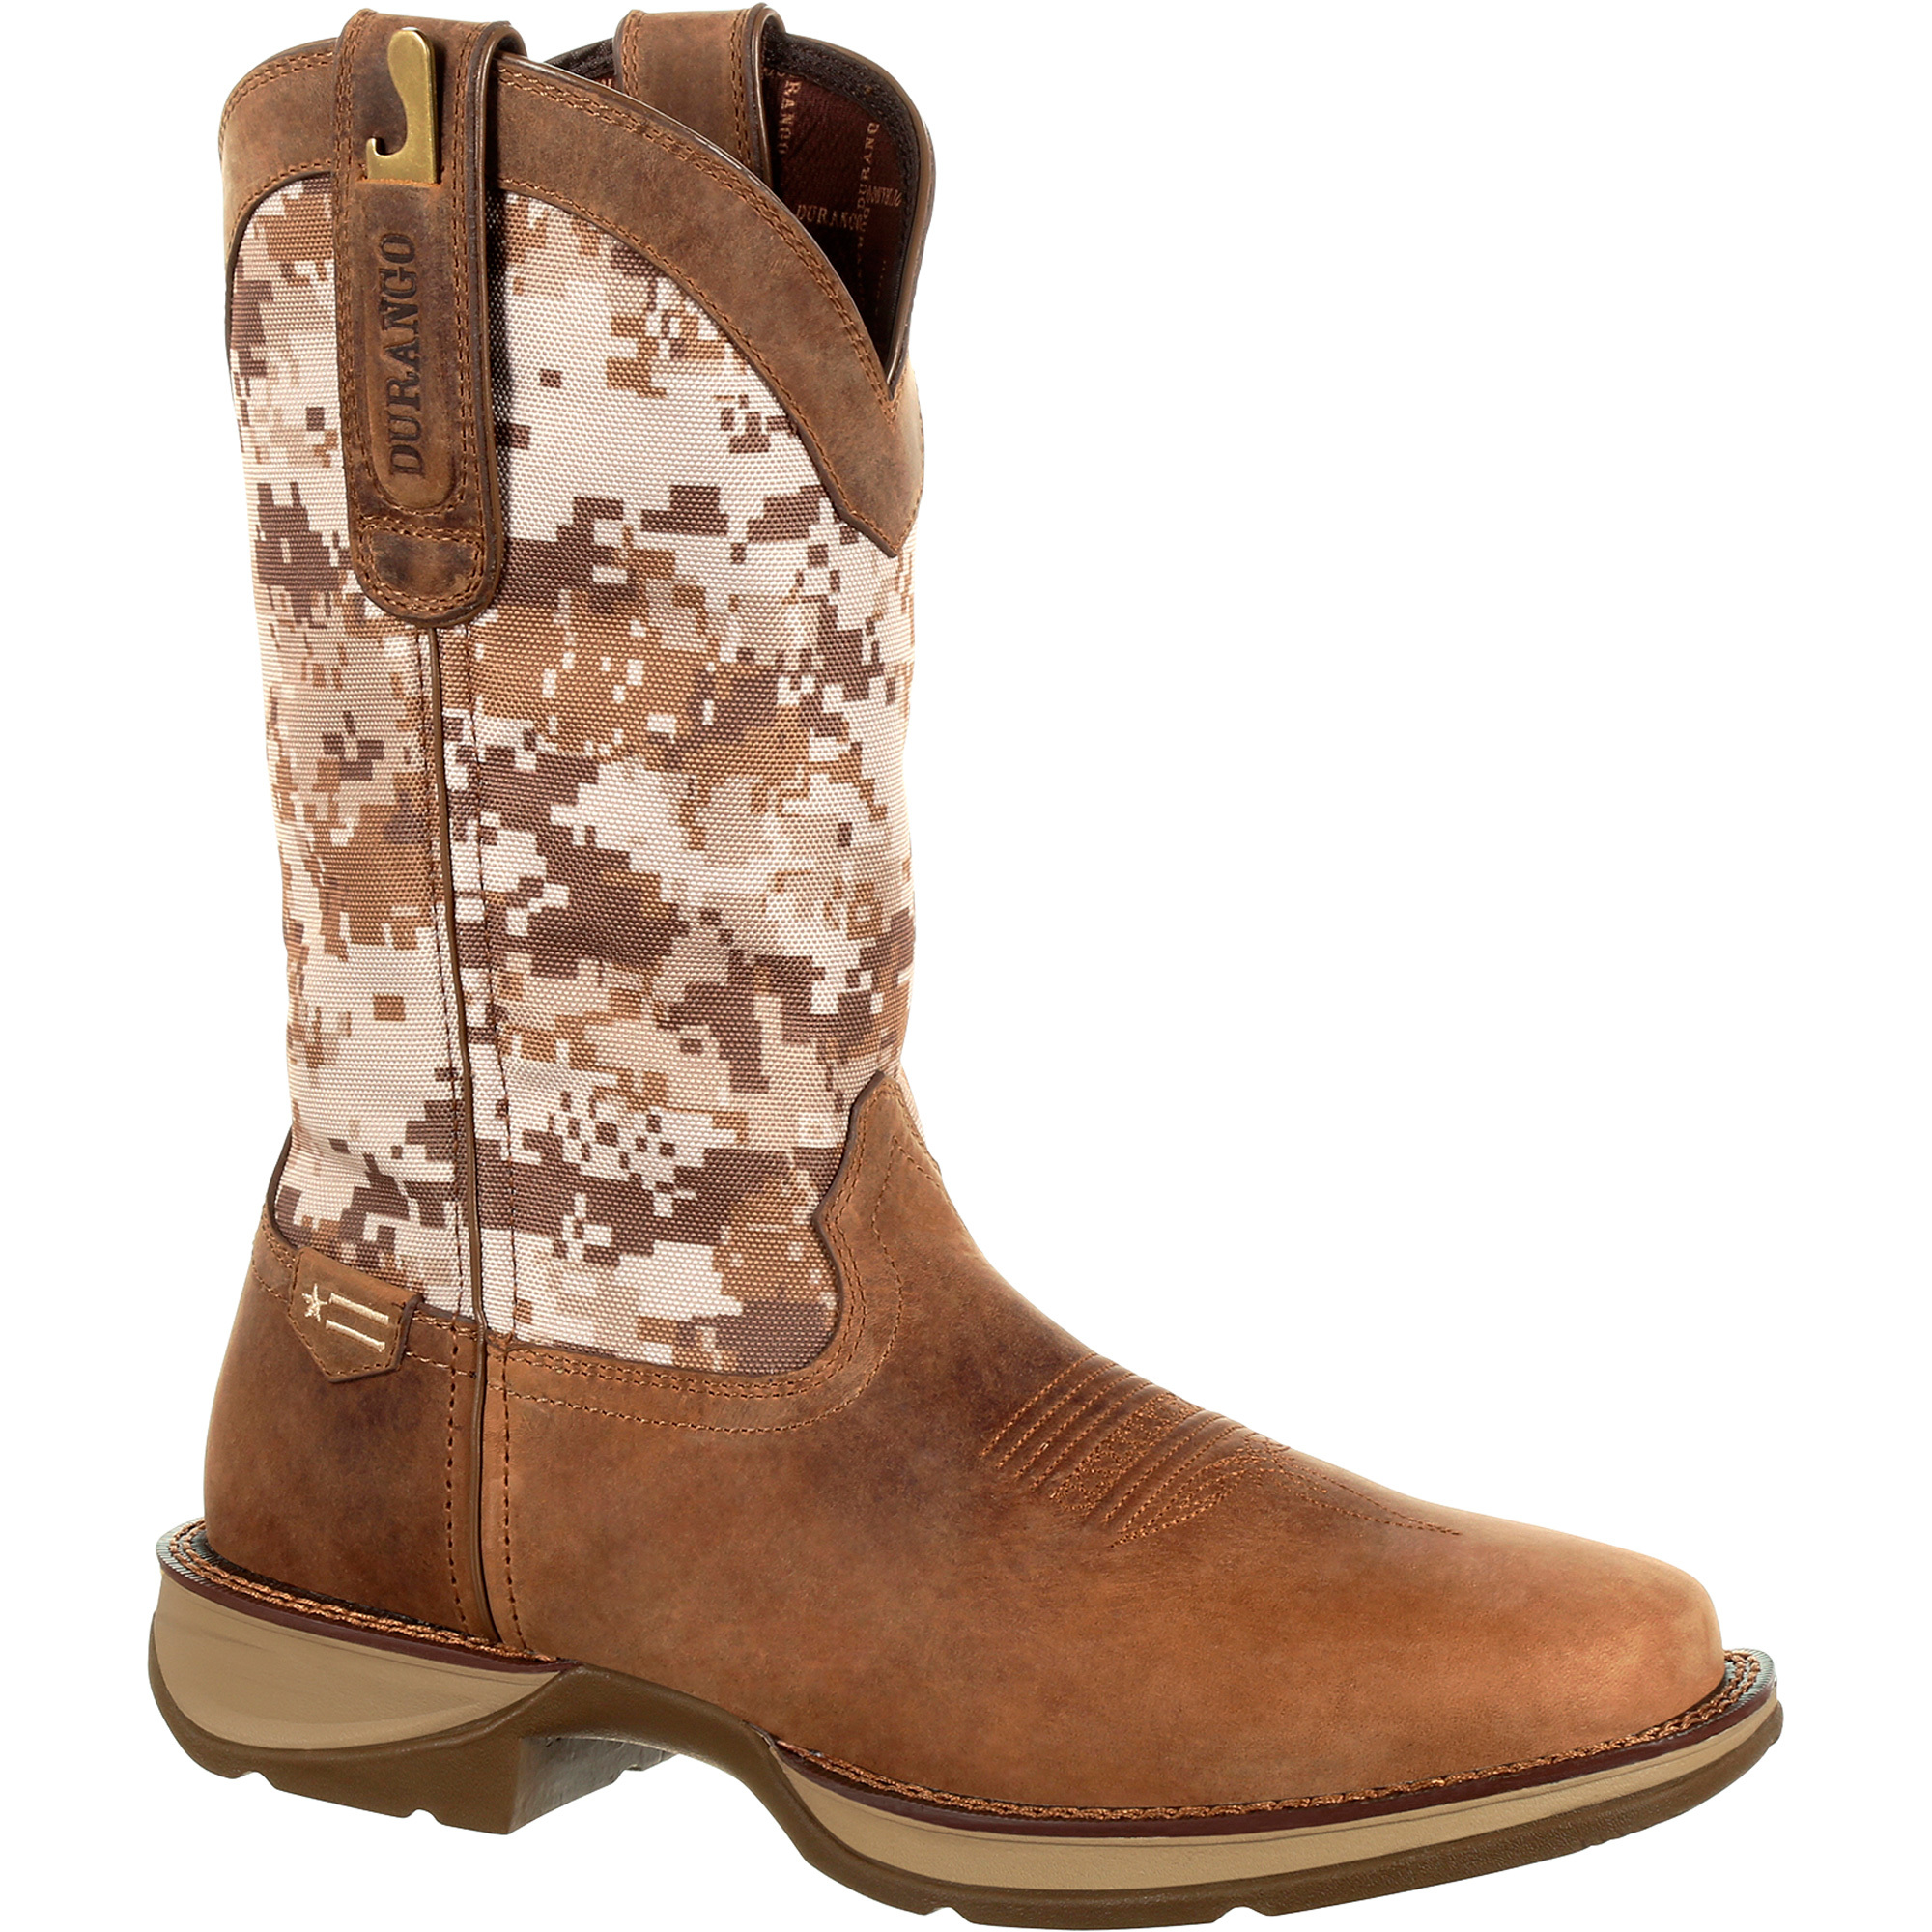 Durango Men's 12Inch Desert Camo Pull-On Rebel Western Boots â Dusty Brown/Desert Camo, Size 12 Wide, Model DDB0166